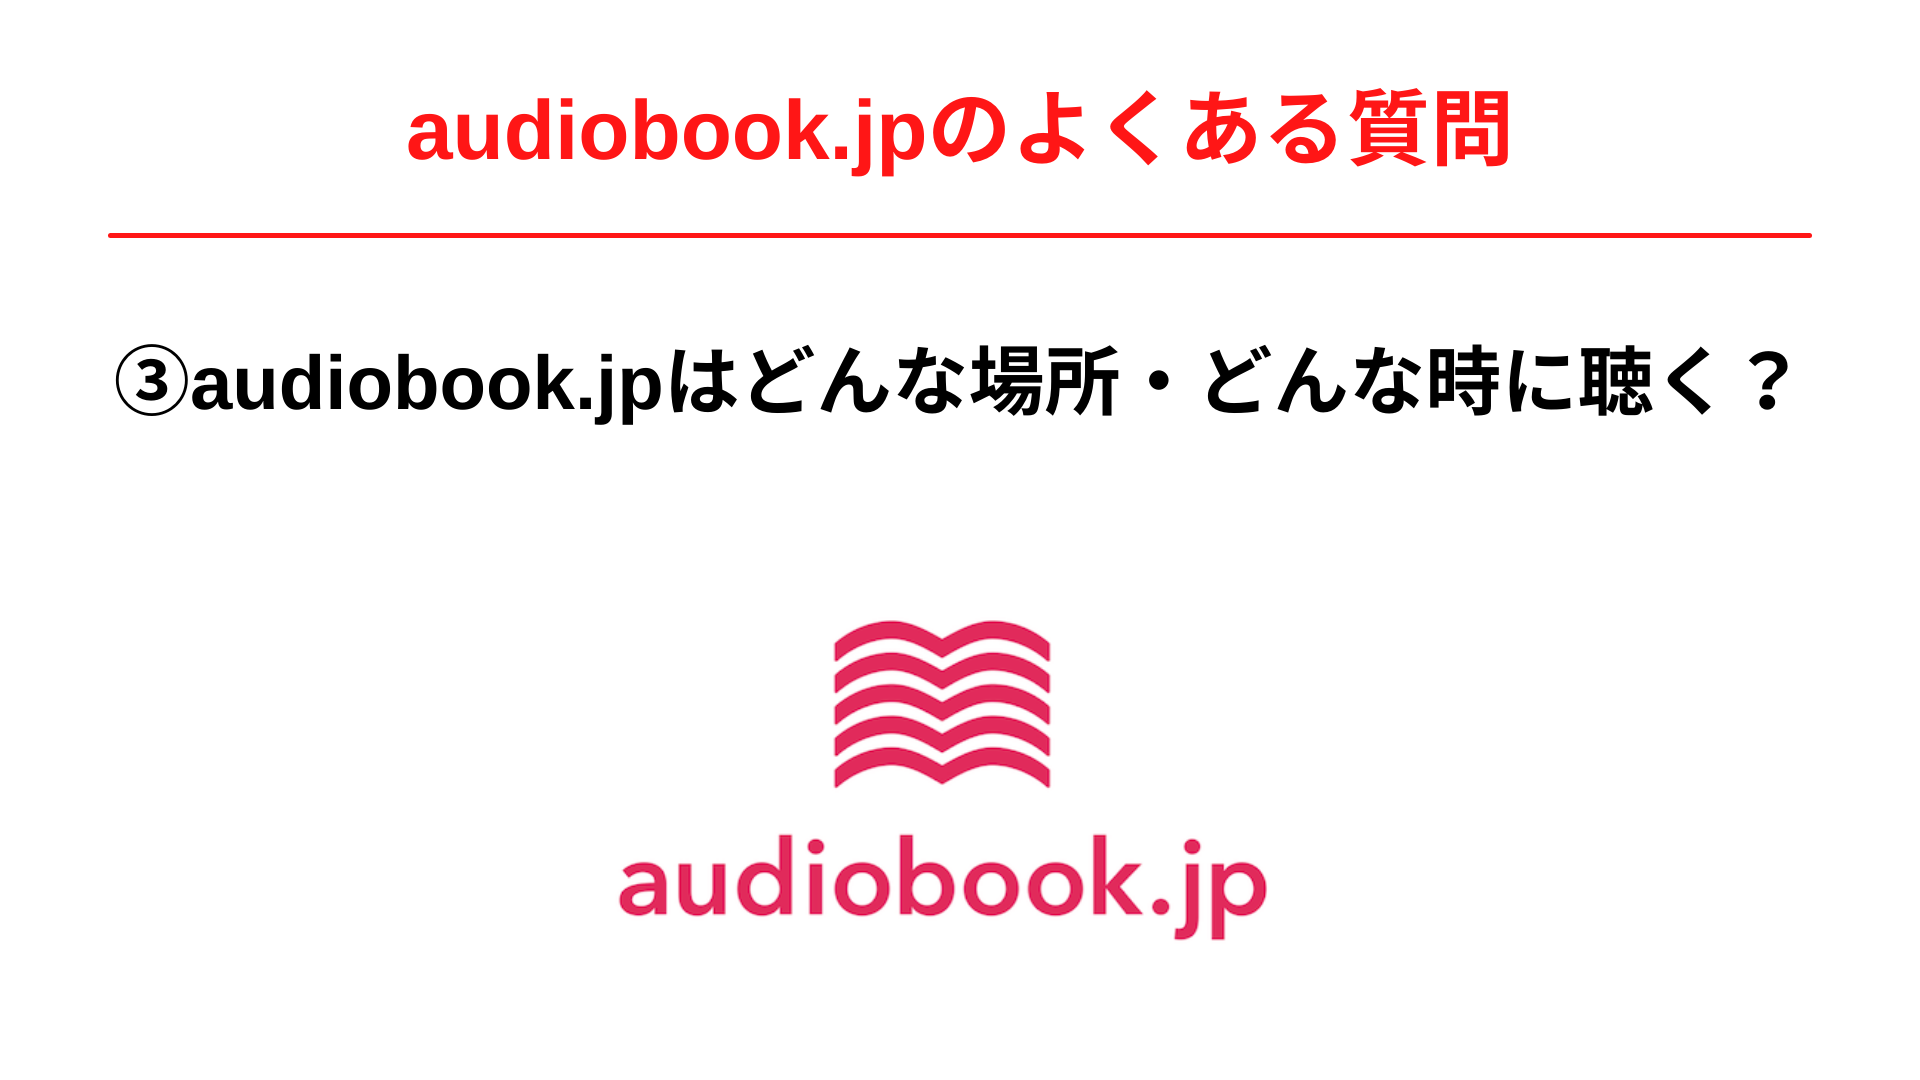 audiobook.jpはどんな場所・どんな時に聴きますか？